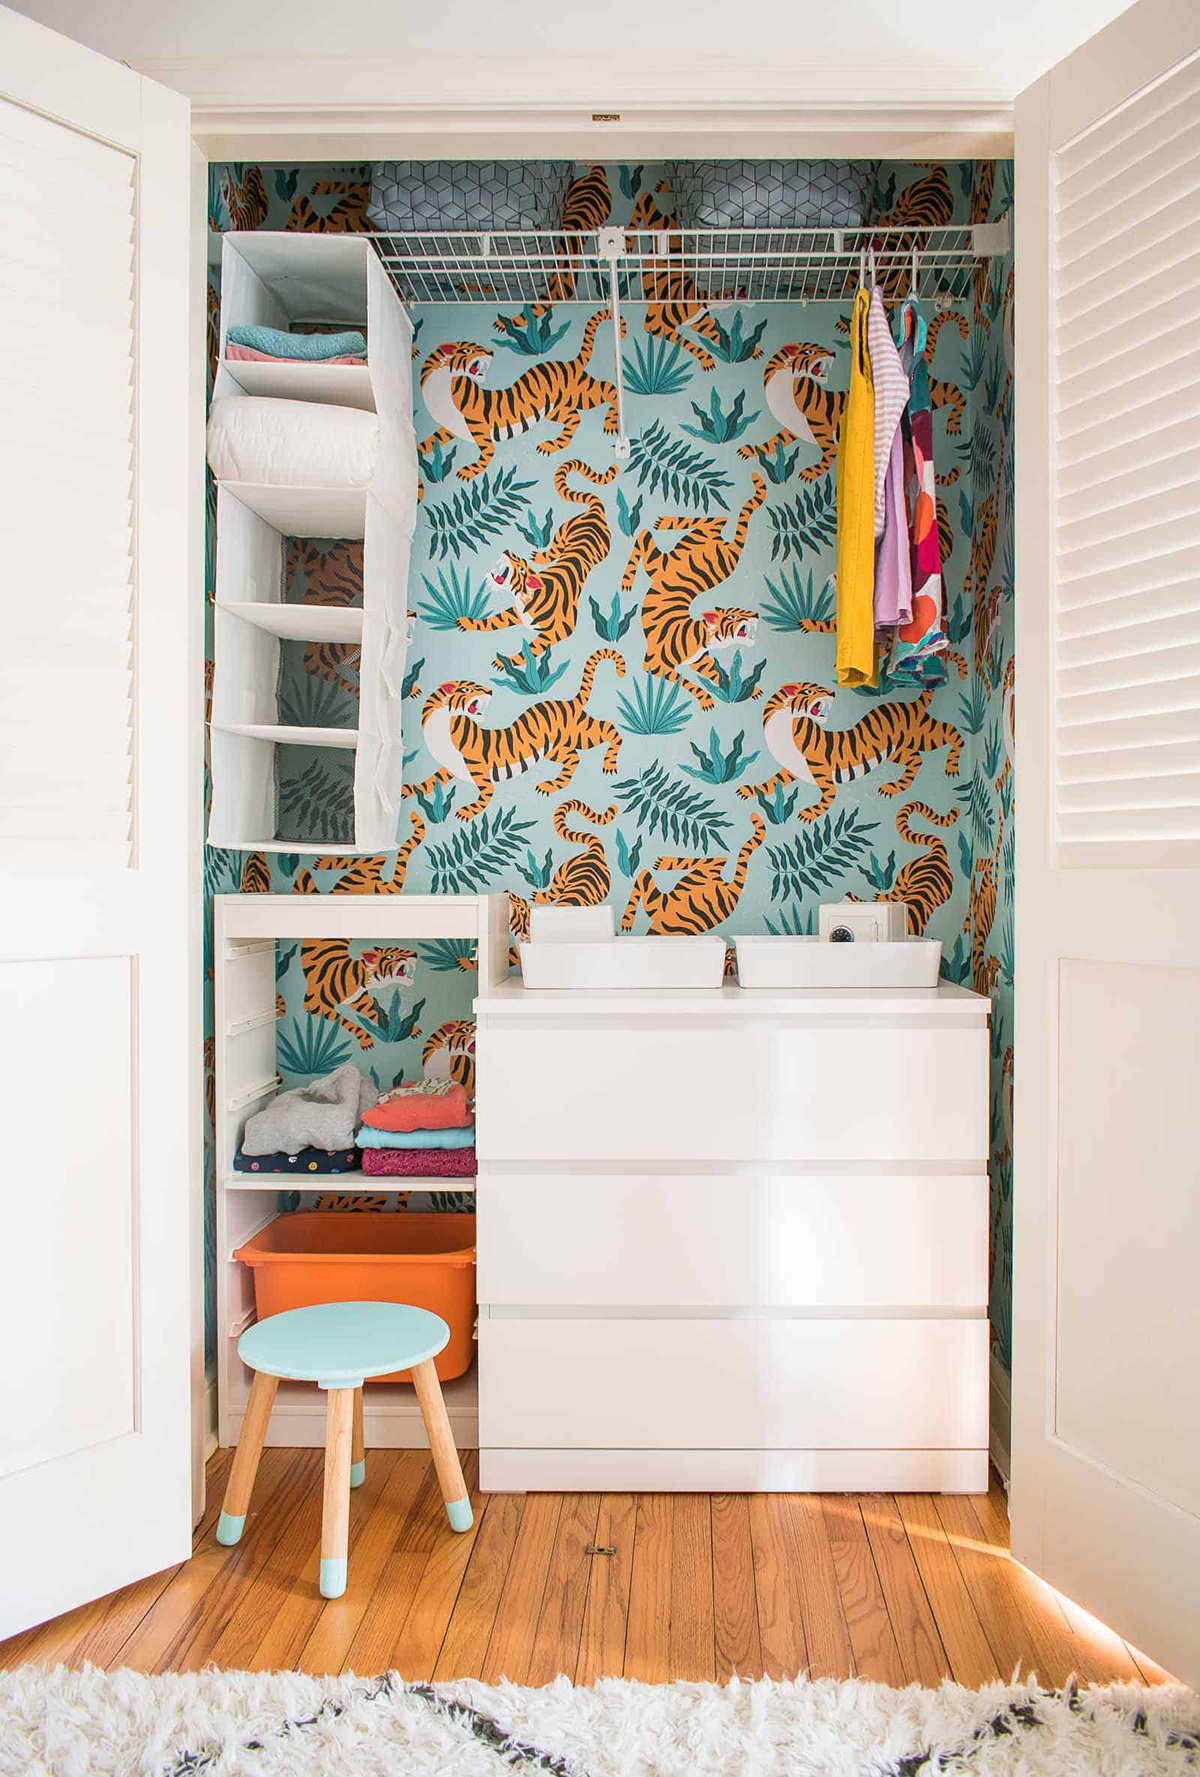 Crouching Tiger Pattern Wallpaper in closet